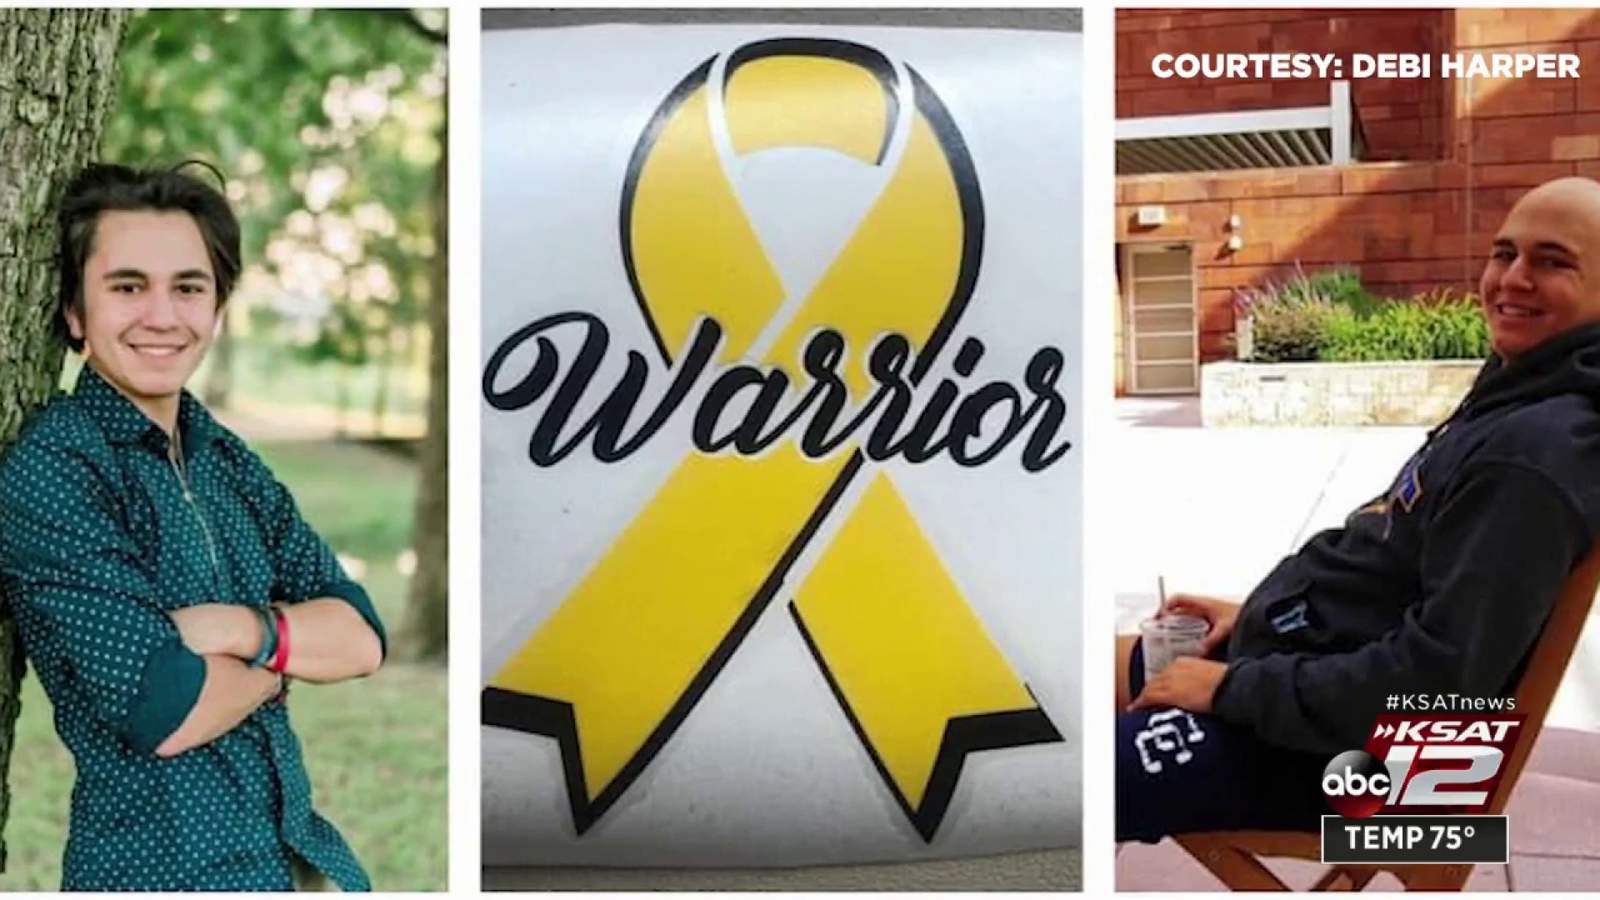 San Antonio student battling cancer receives special surprise